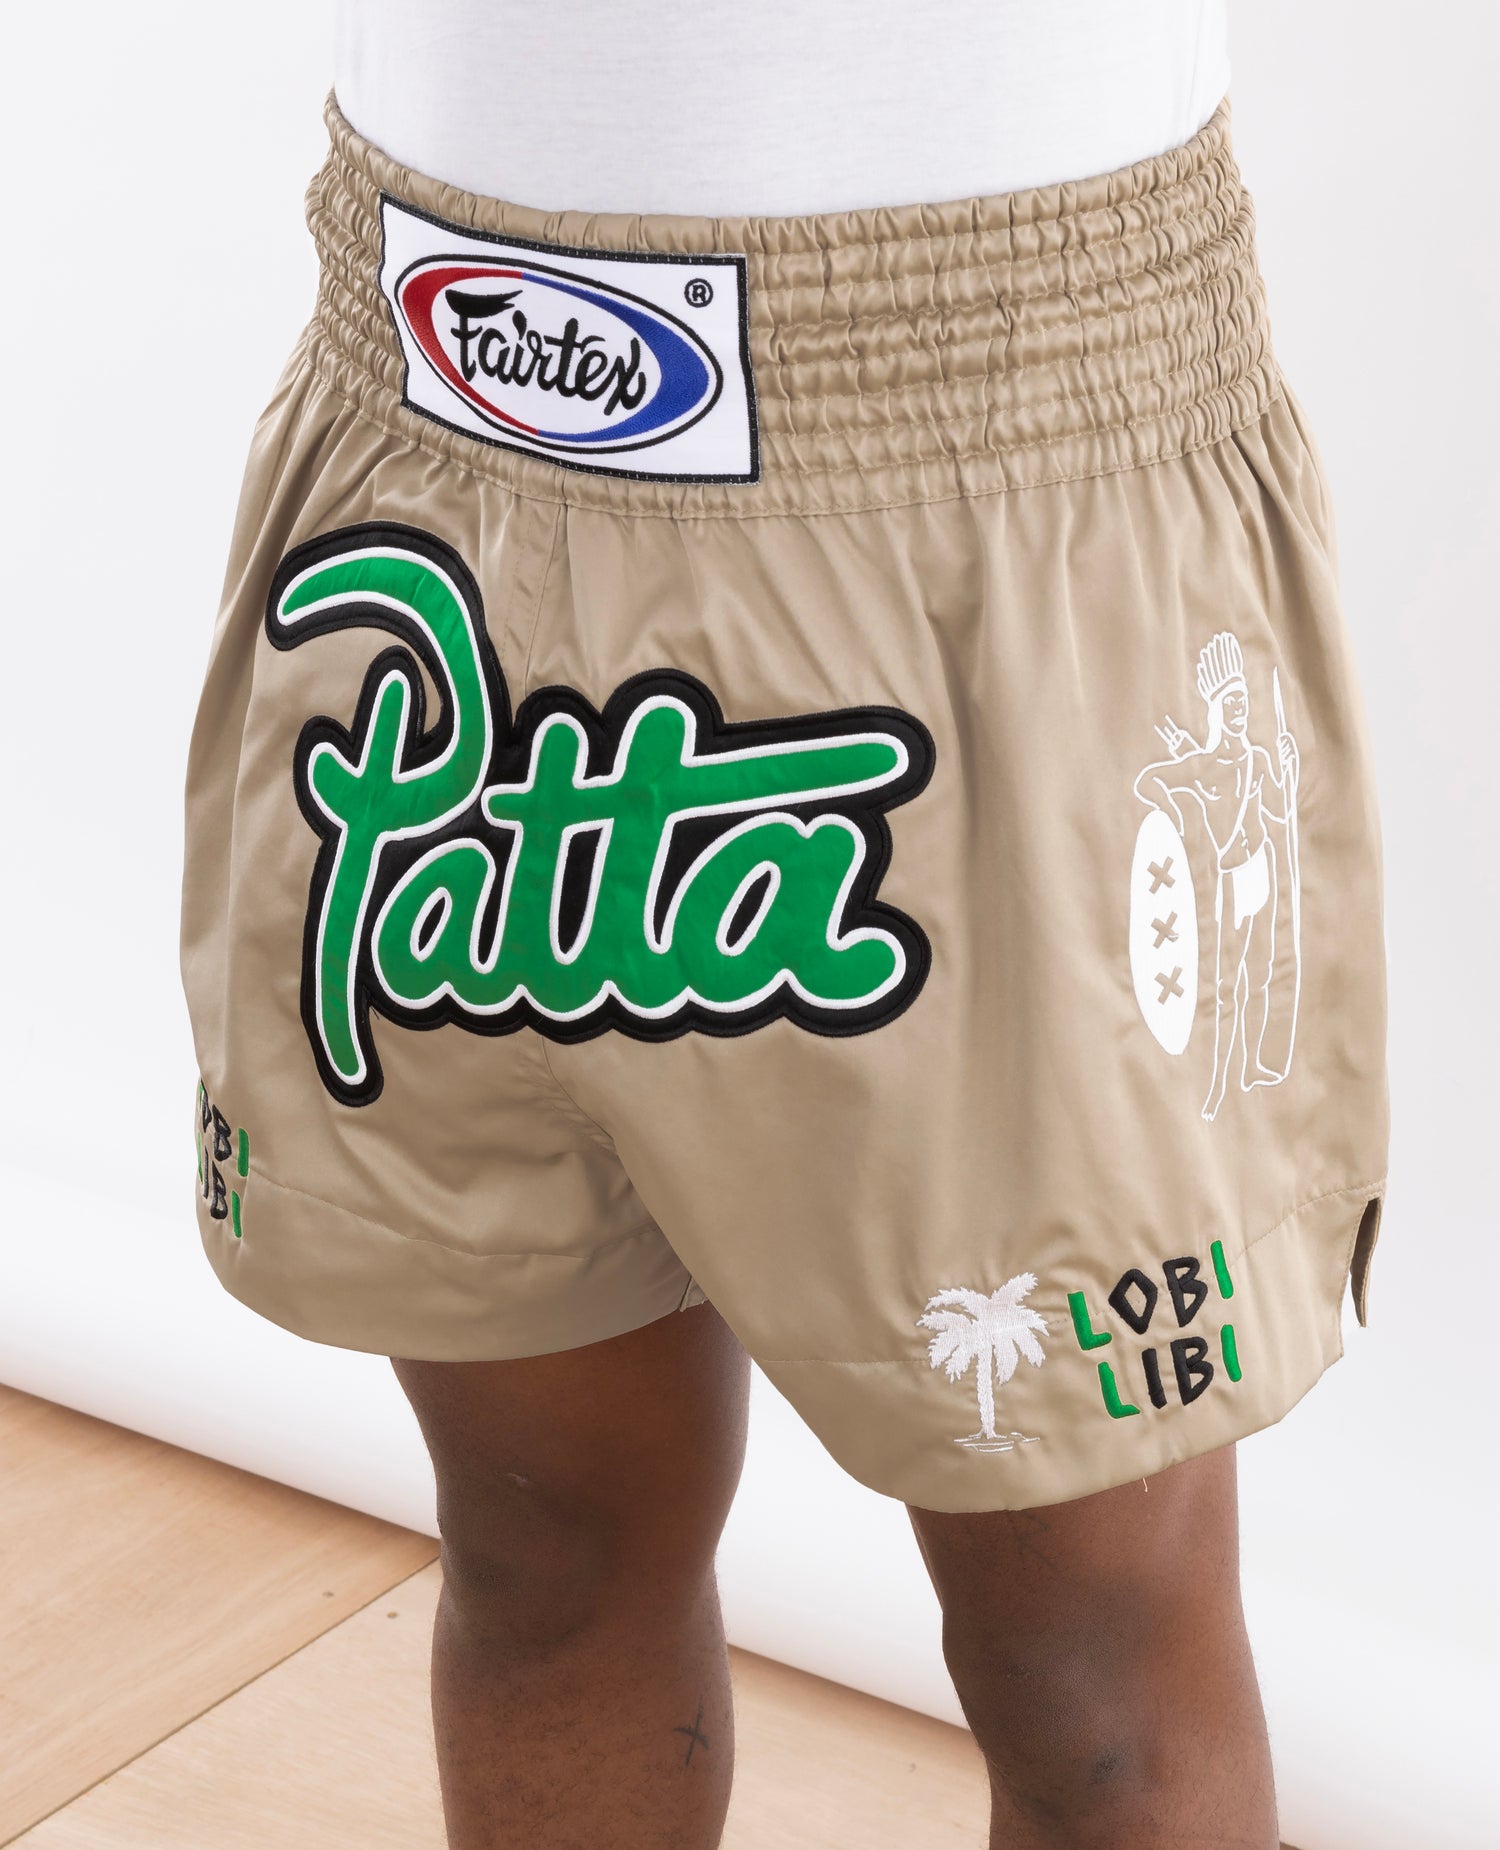 Pantaloncini Patta x Fairtex Muay Thai (Oro/Verde Jolly)